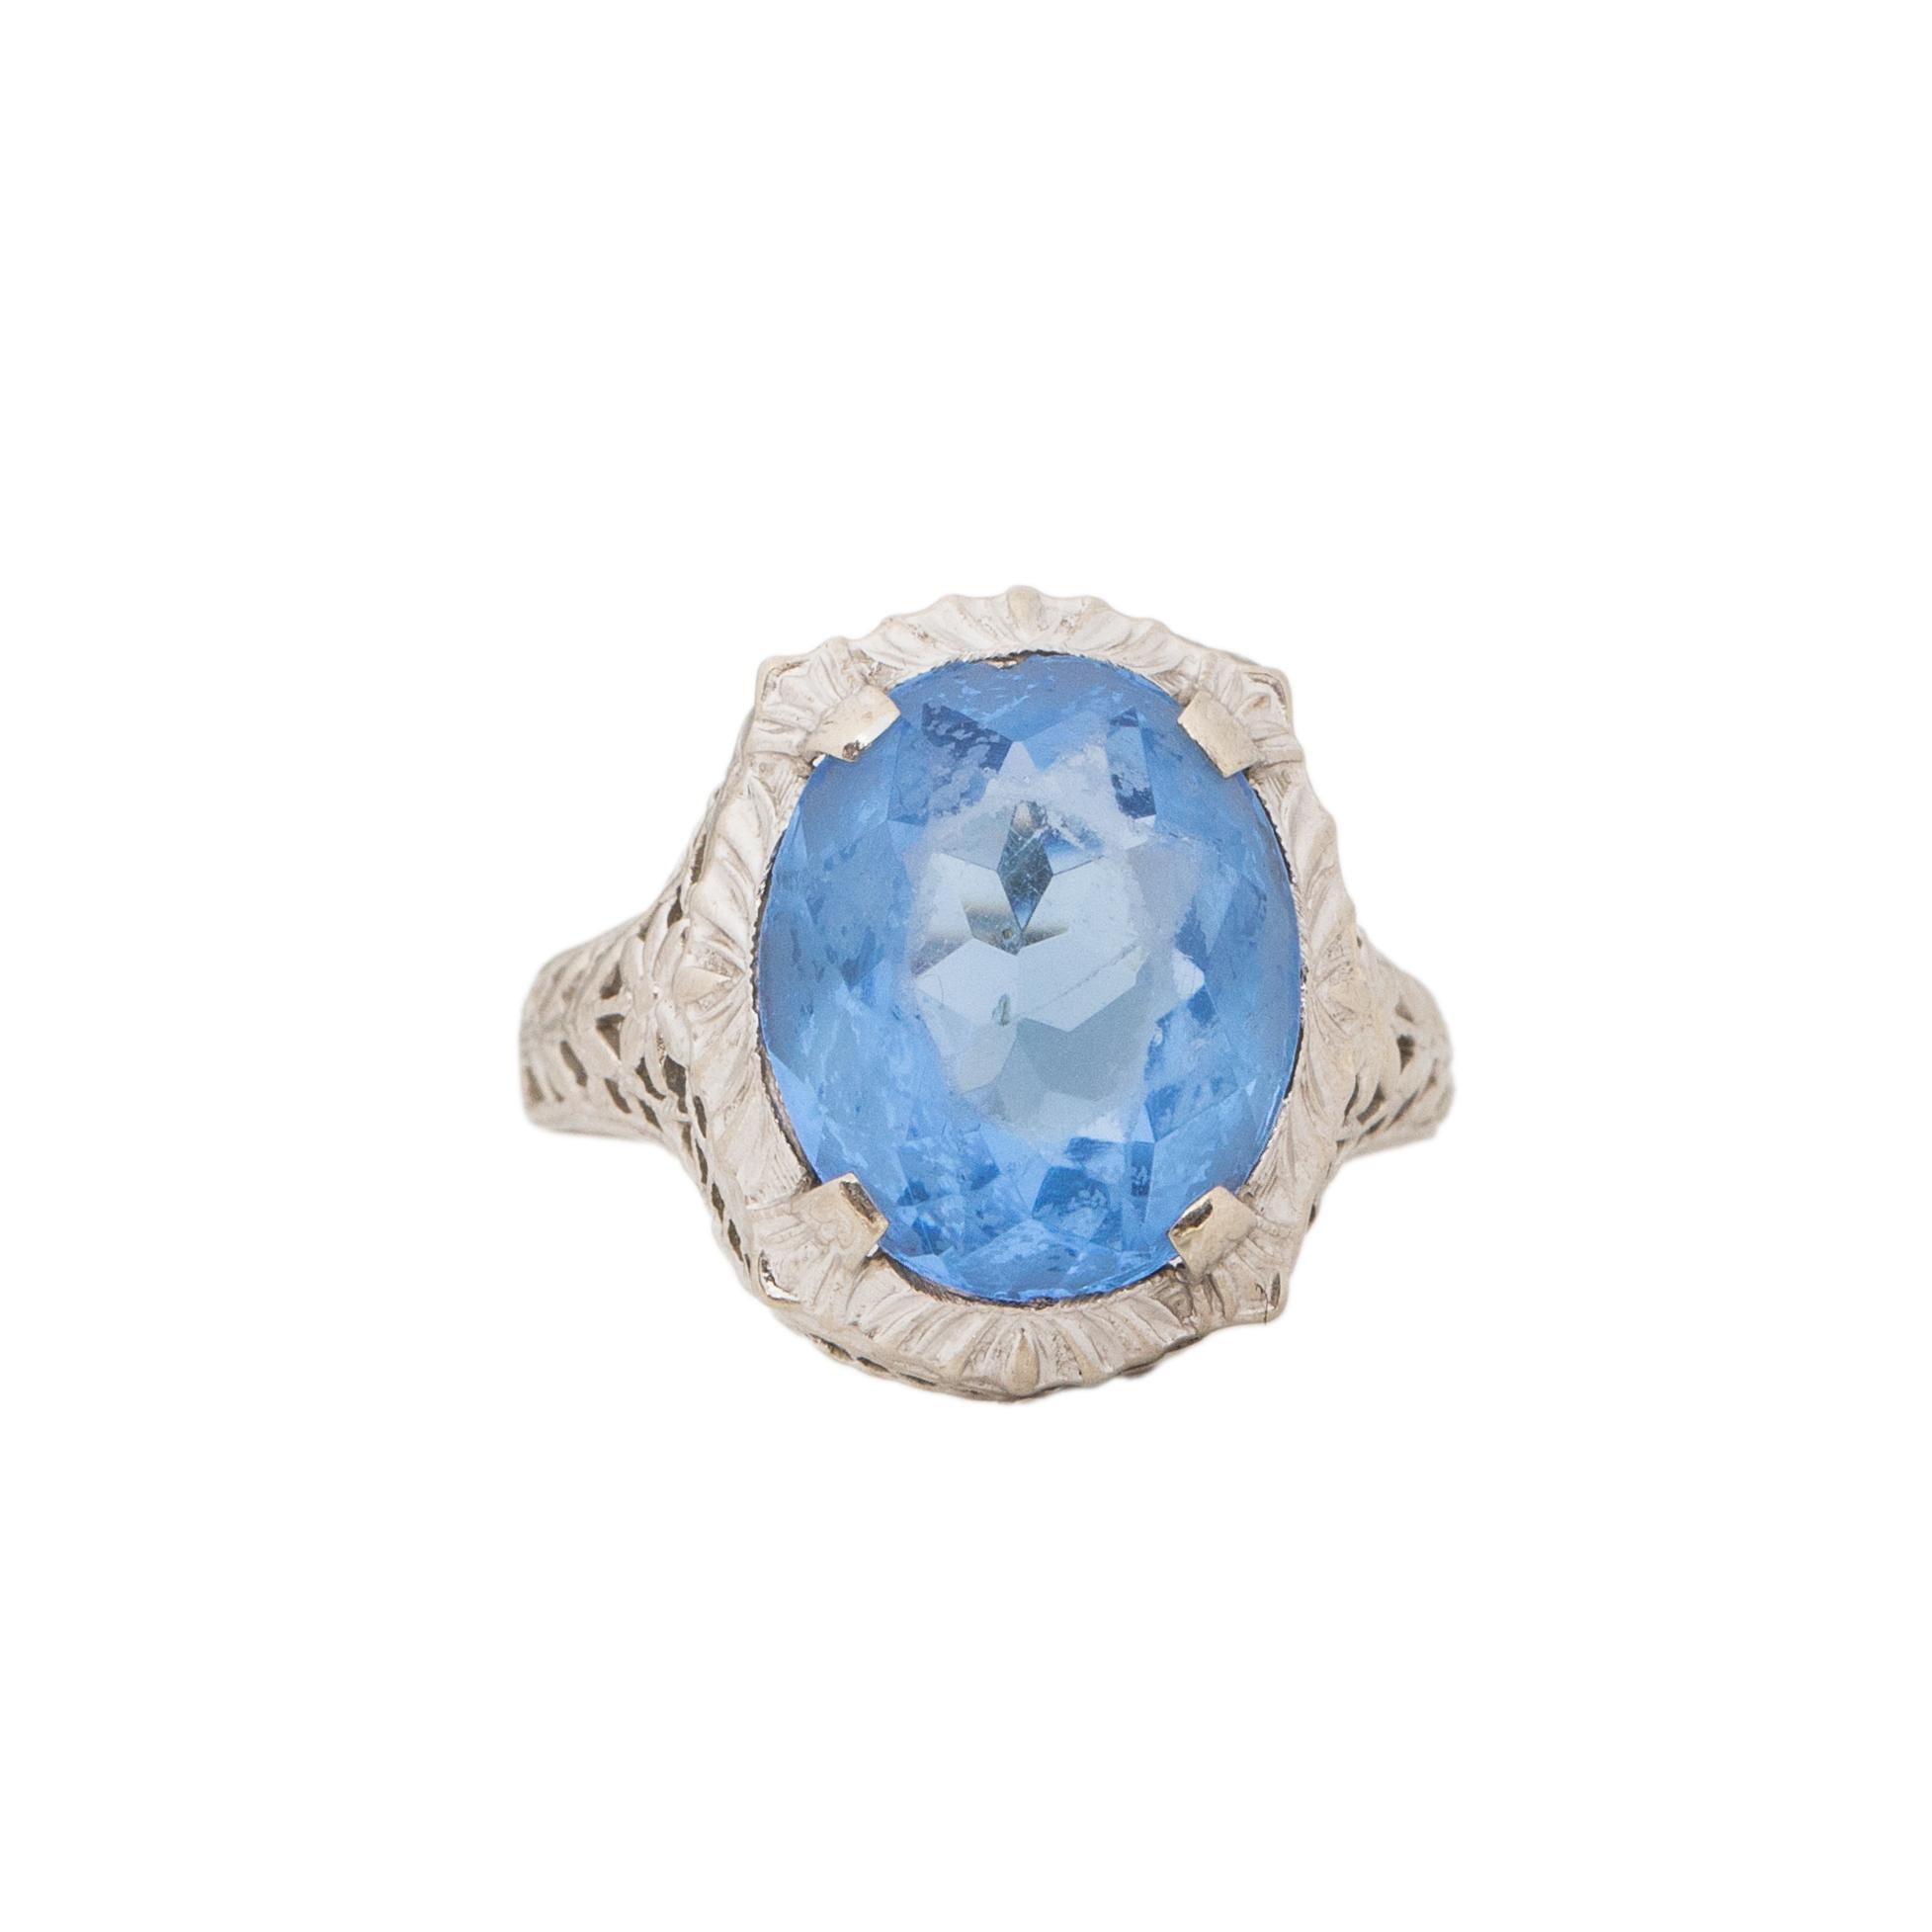 Circa 1920's 10K White Gold Vintage Filigree Blue Gem Fashion Ring